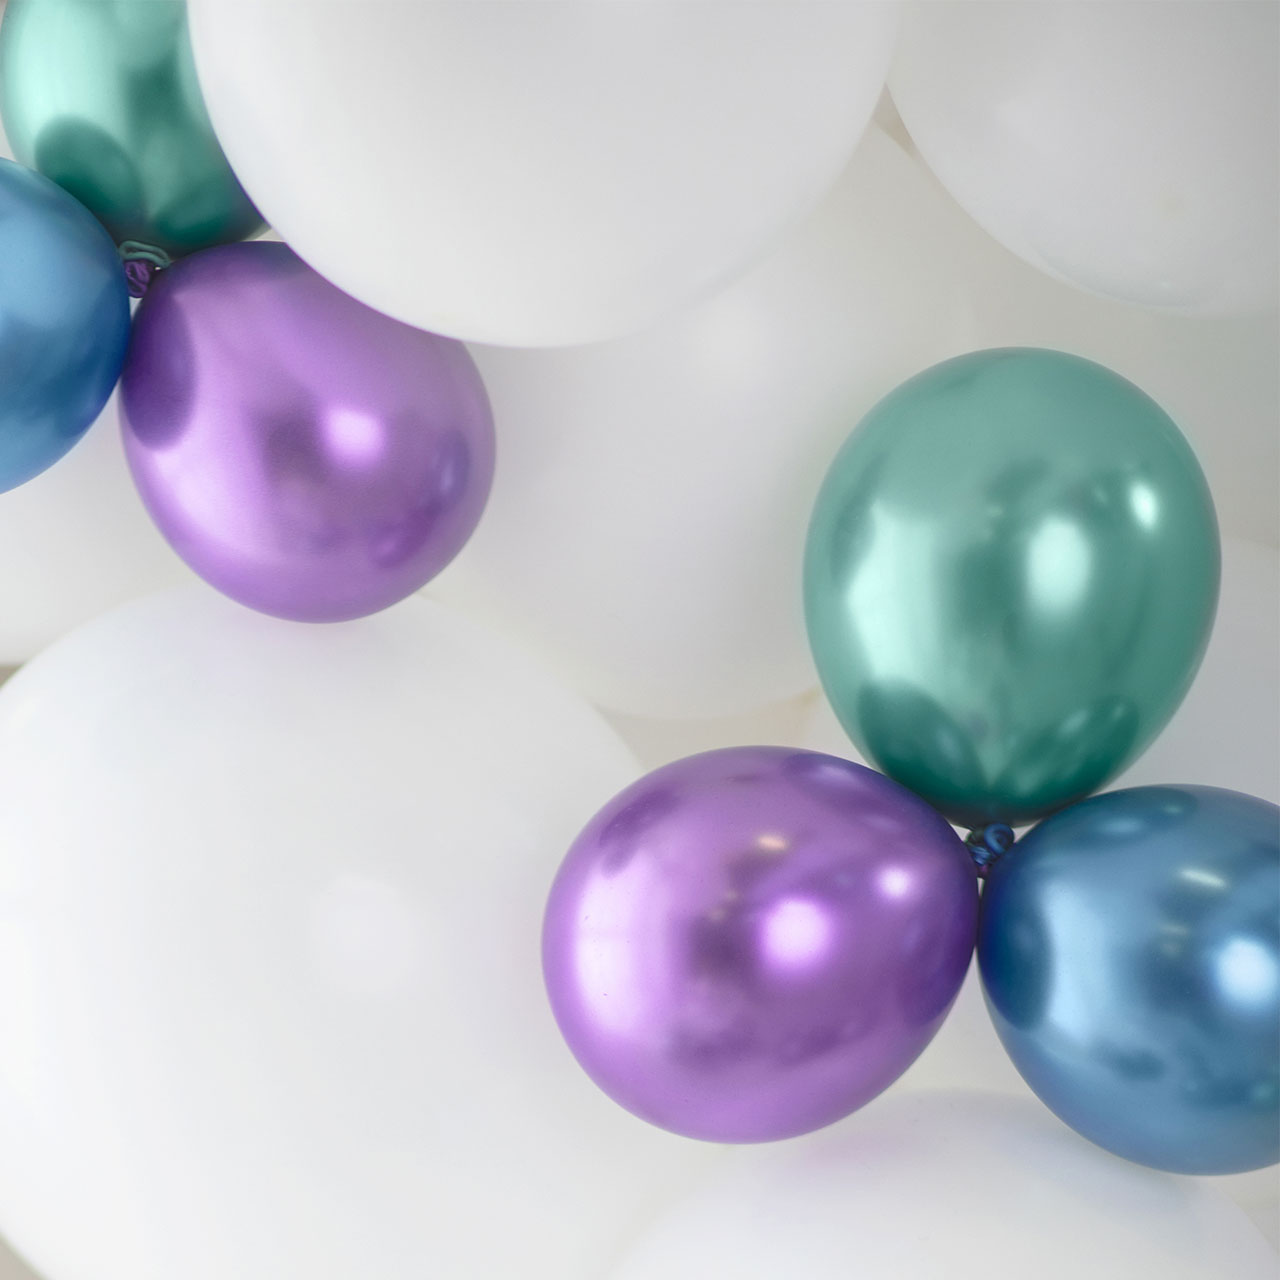 10 Mini Glossy Green Balloons